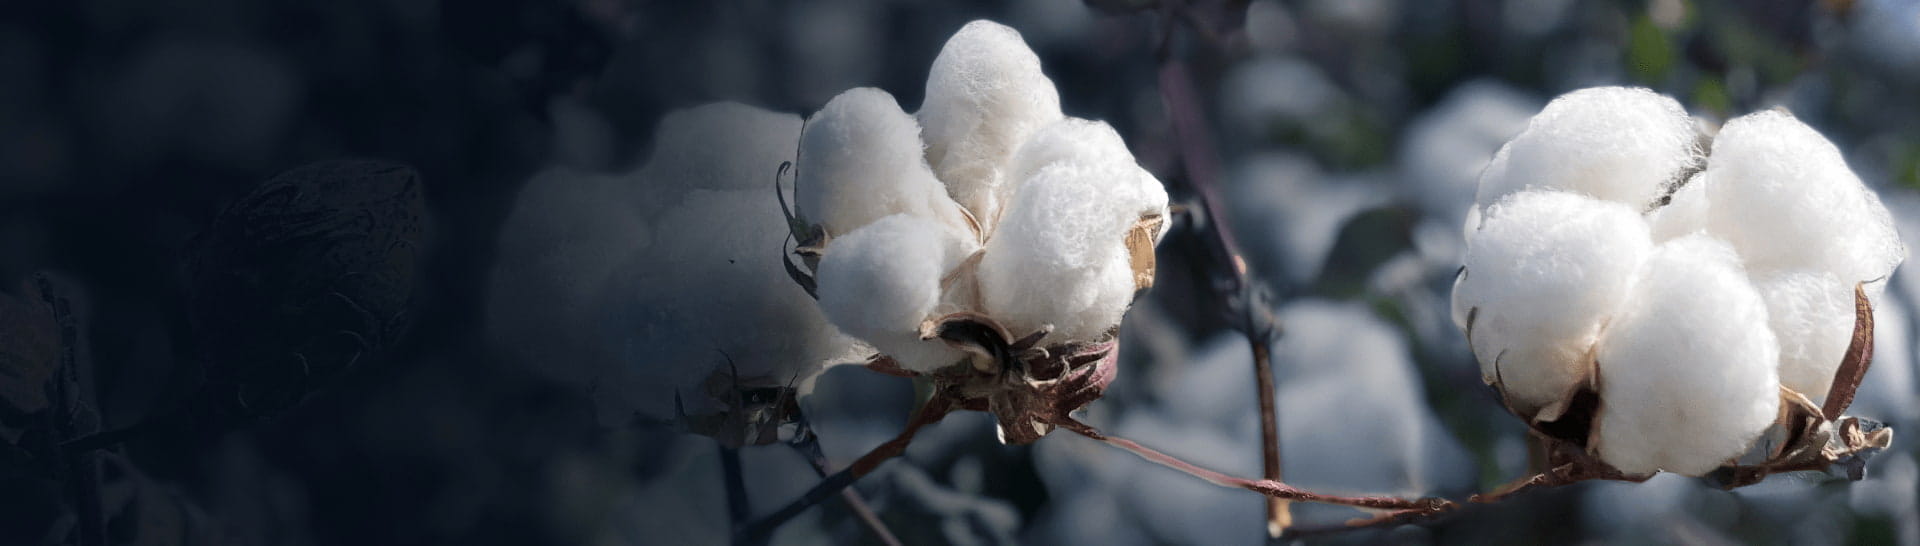 Cotton market intelligence